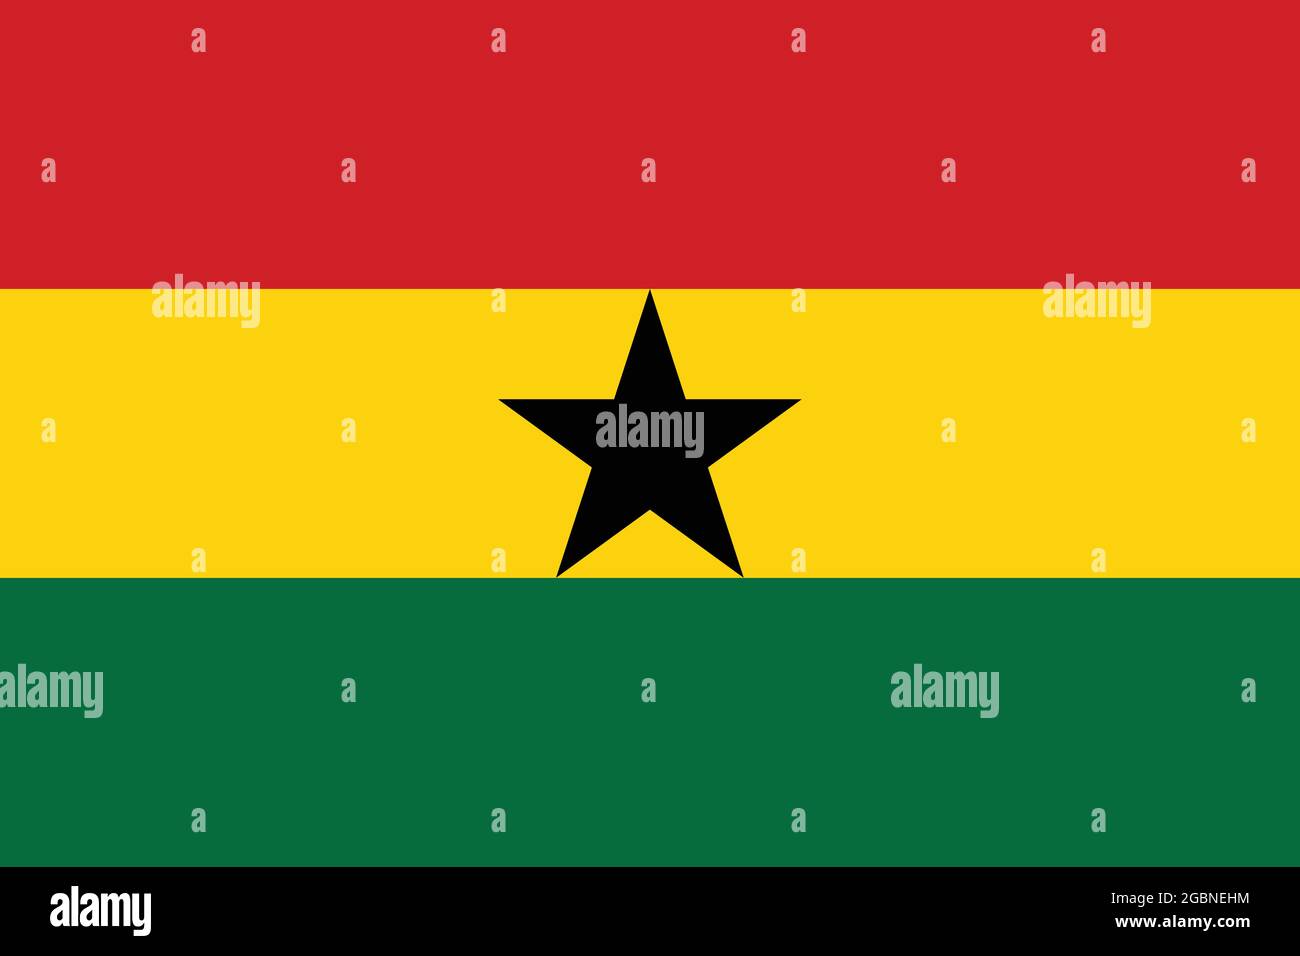 National flag of Ghana original size and colors vector illustration, Ghana national flag Theodosia Okoh, Pan-African Ghanaian flag, Republic of Ghana Stock Vector